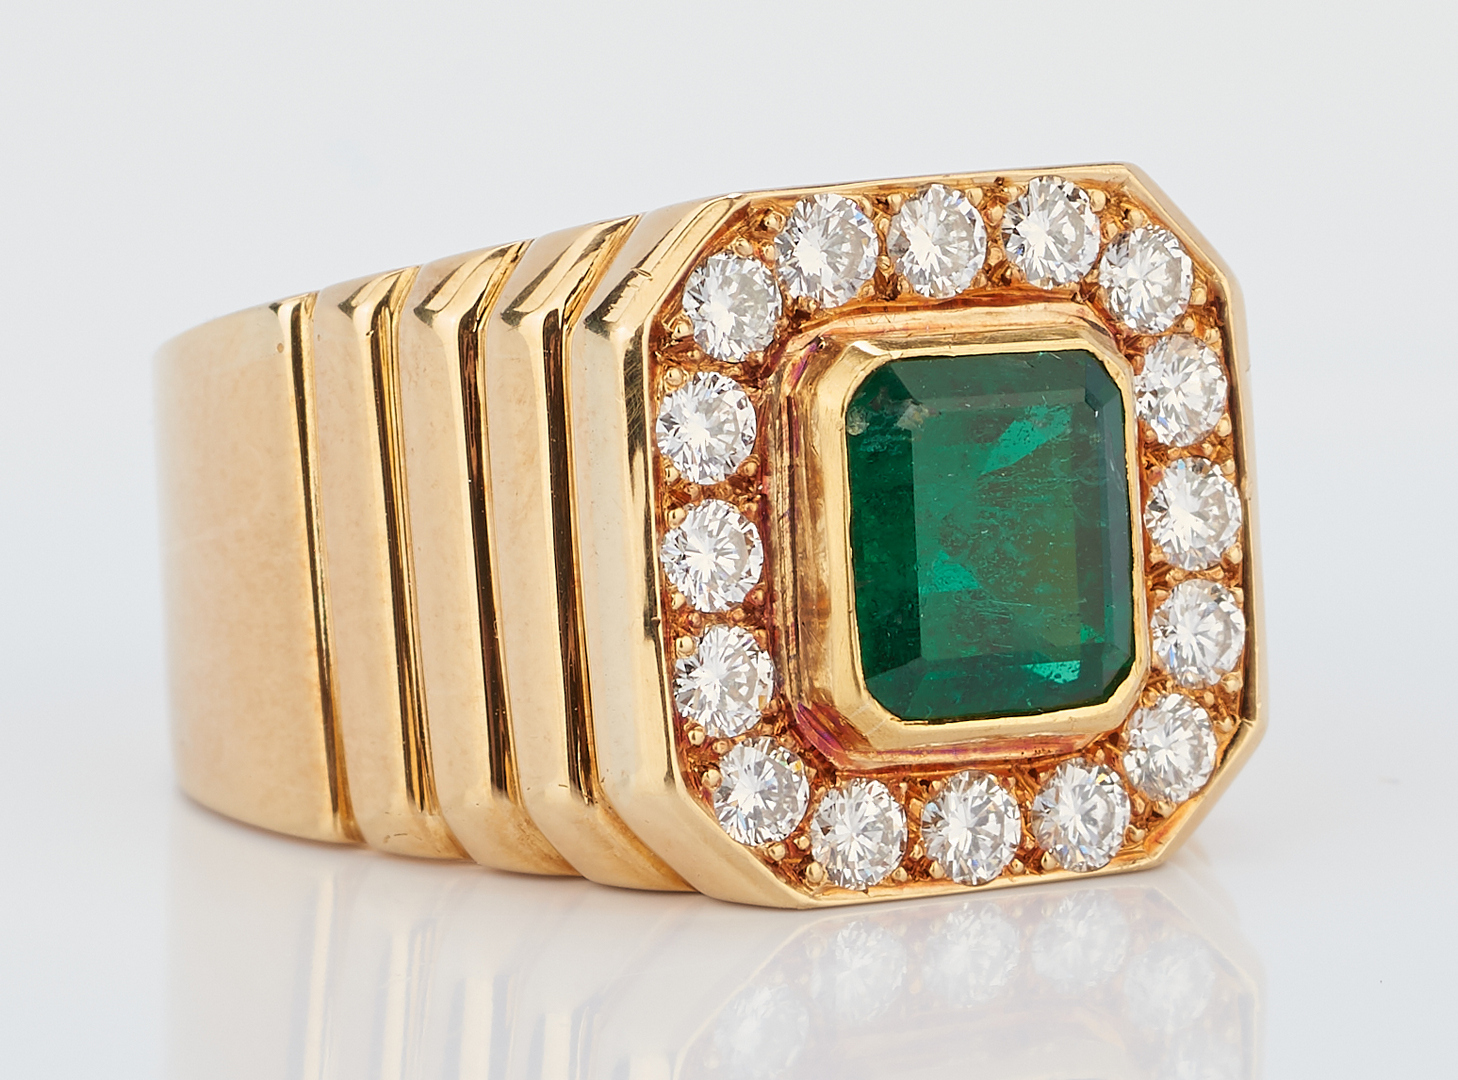 Lot 216: 2.5 Carat Emerald and Diamond Men's Ring